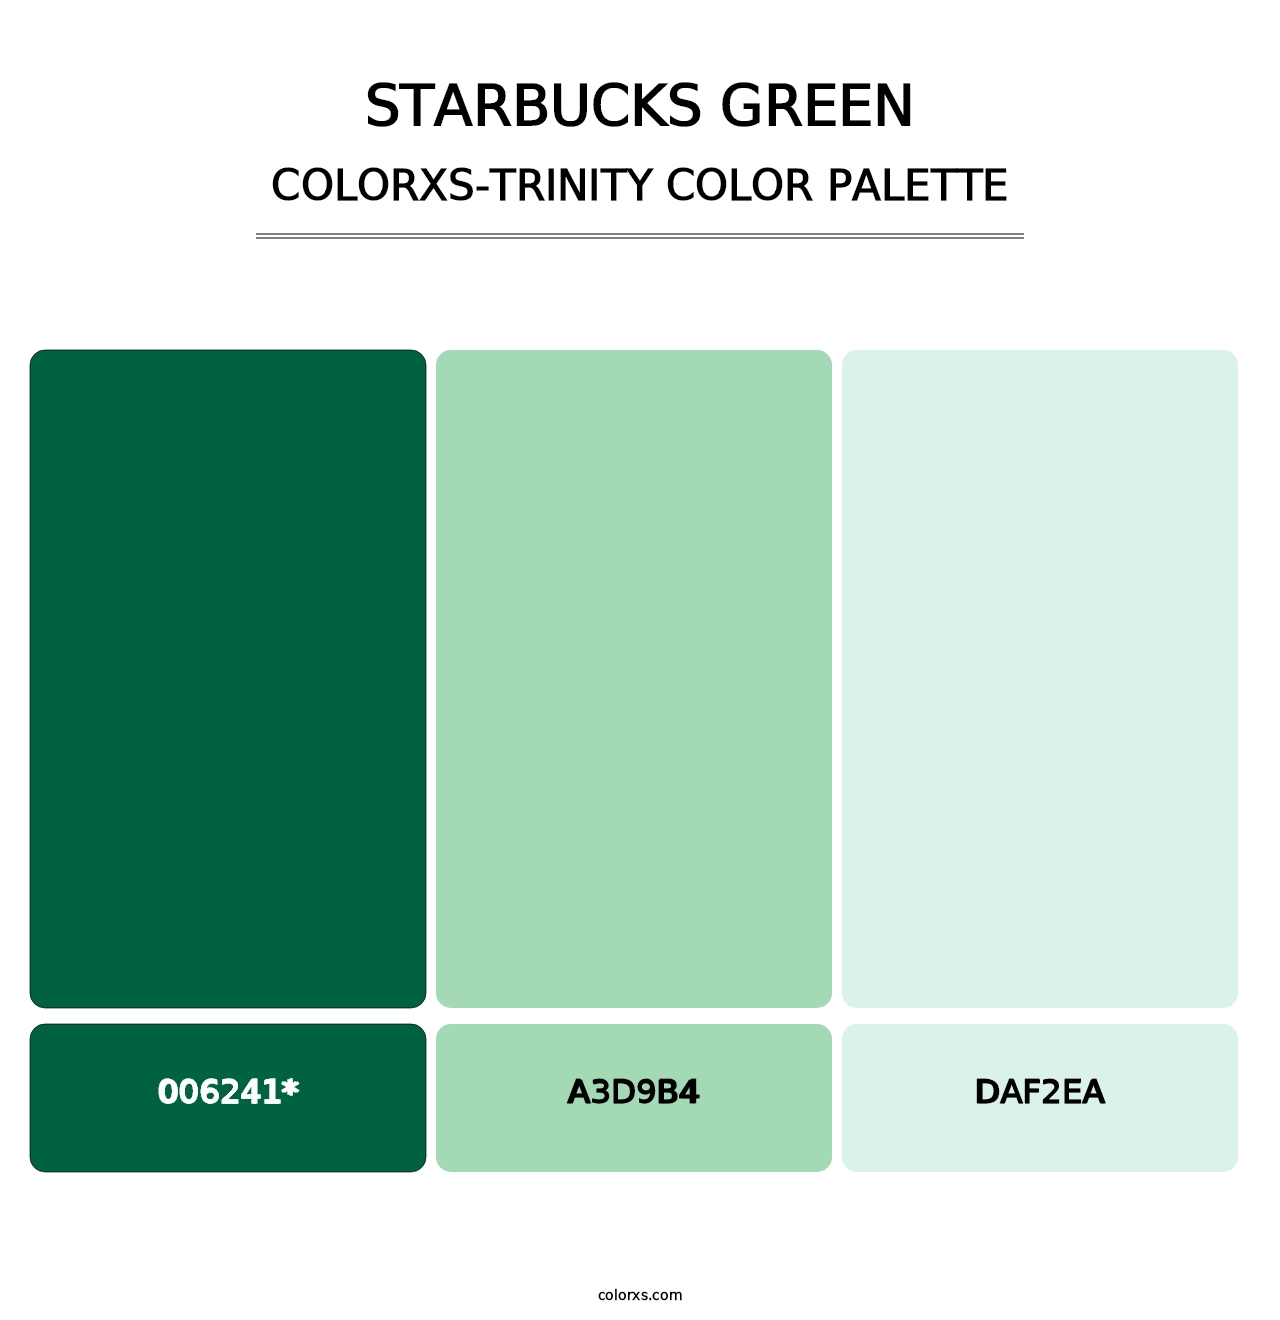 Starbucks Green - Colorxs Trinity Palette